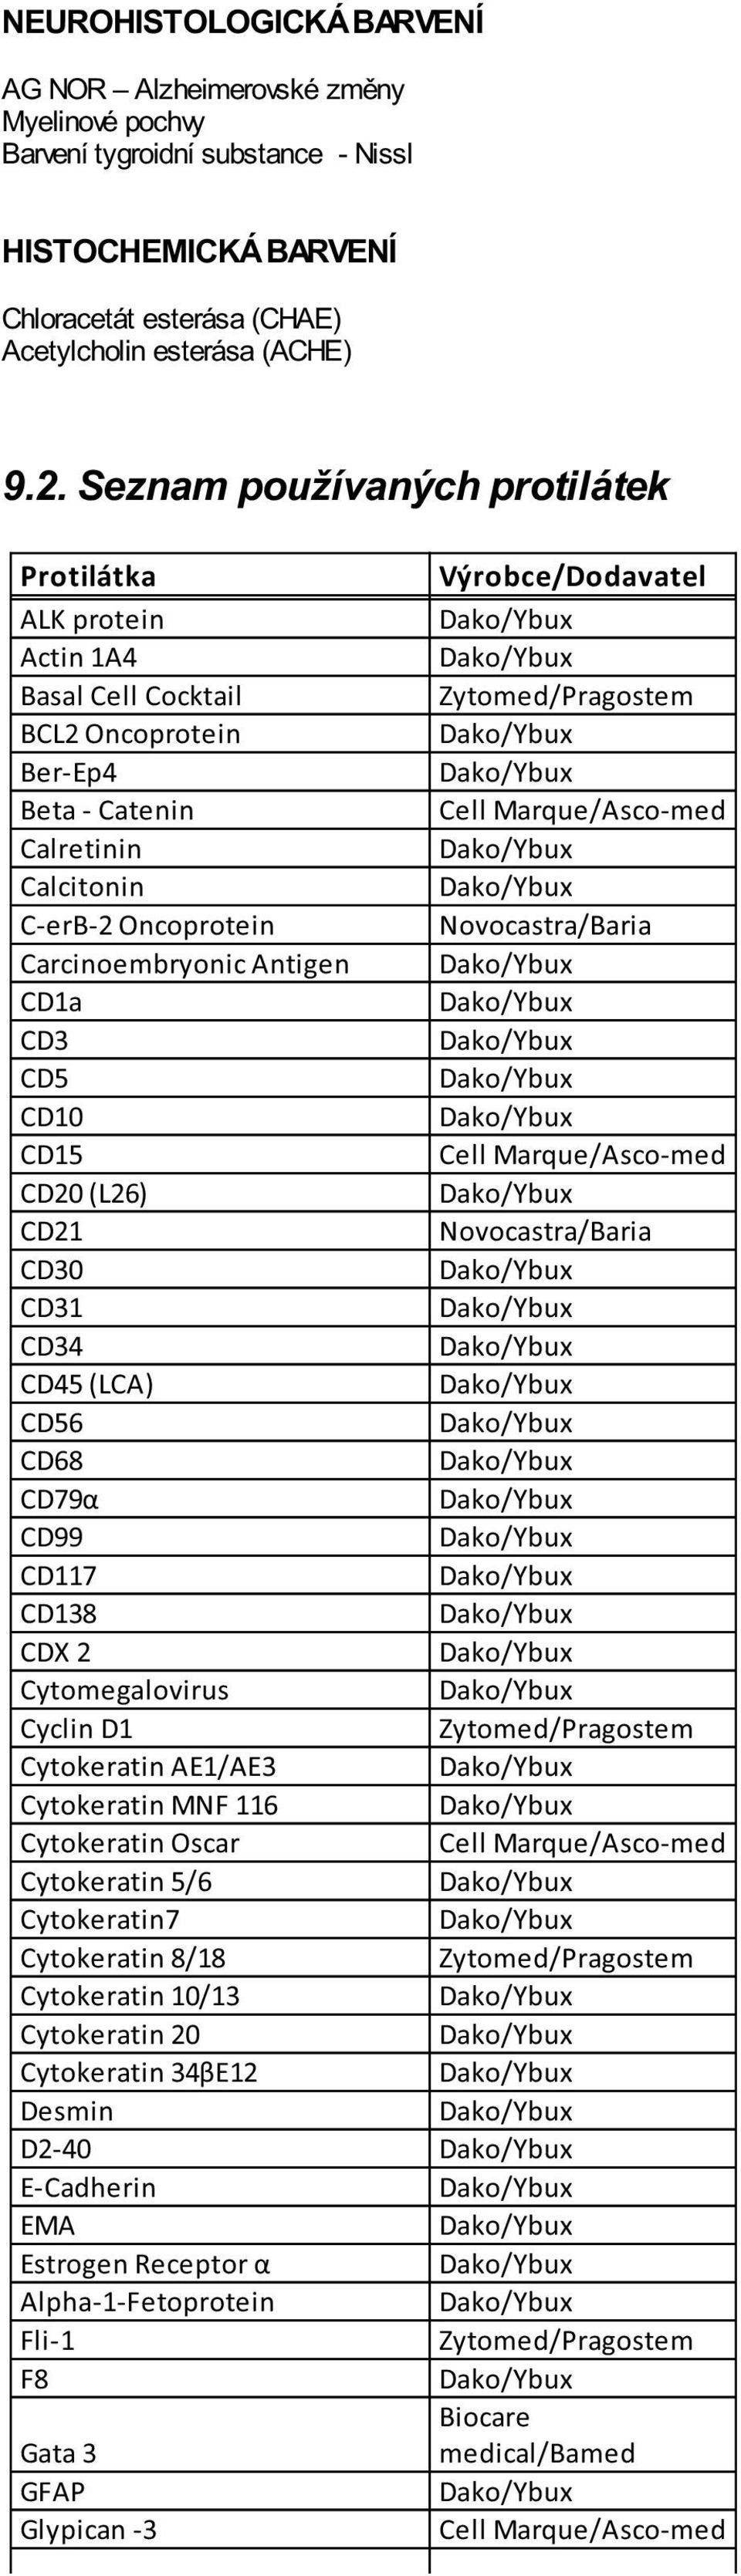 Calcitonin C-erB-2 Oncoprotein Novocastra/Baria Carcinoembryonic Antigen CD1a CD3 CD5 CD10 CD15 Cell Marque/Asco-med CD20 (L26) CD21 Novocastra/Baria CD30 CD31 CD34 CD45 (LCA) CD56 CD68 CD79α CD99